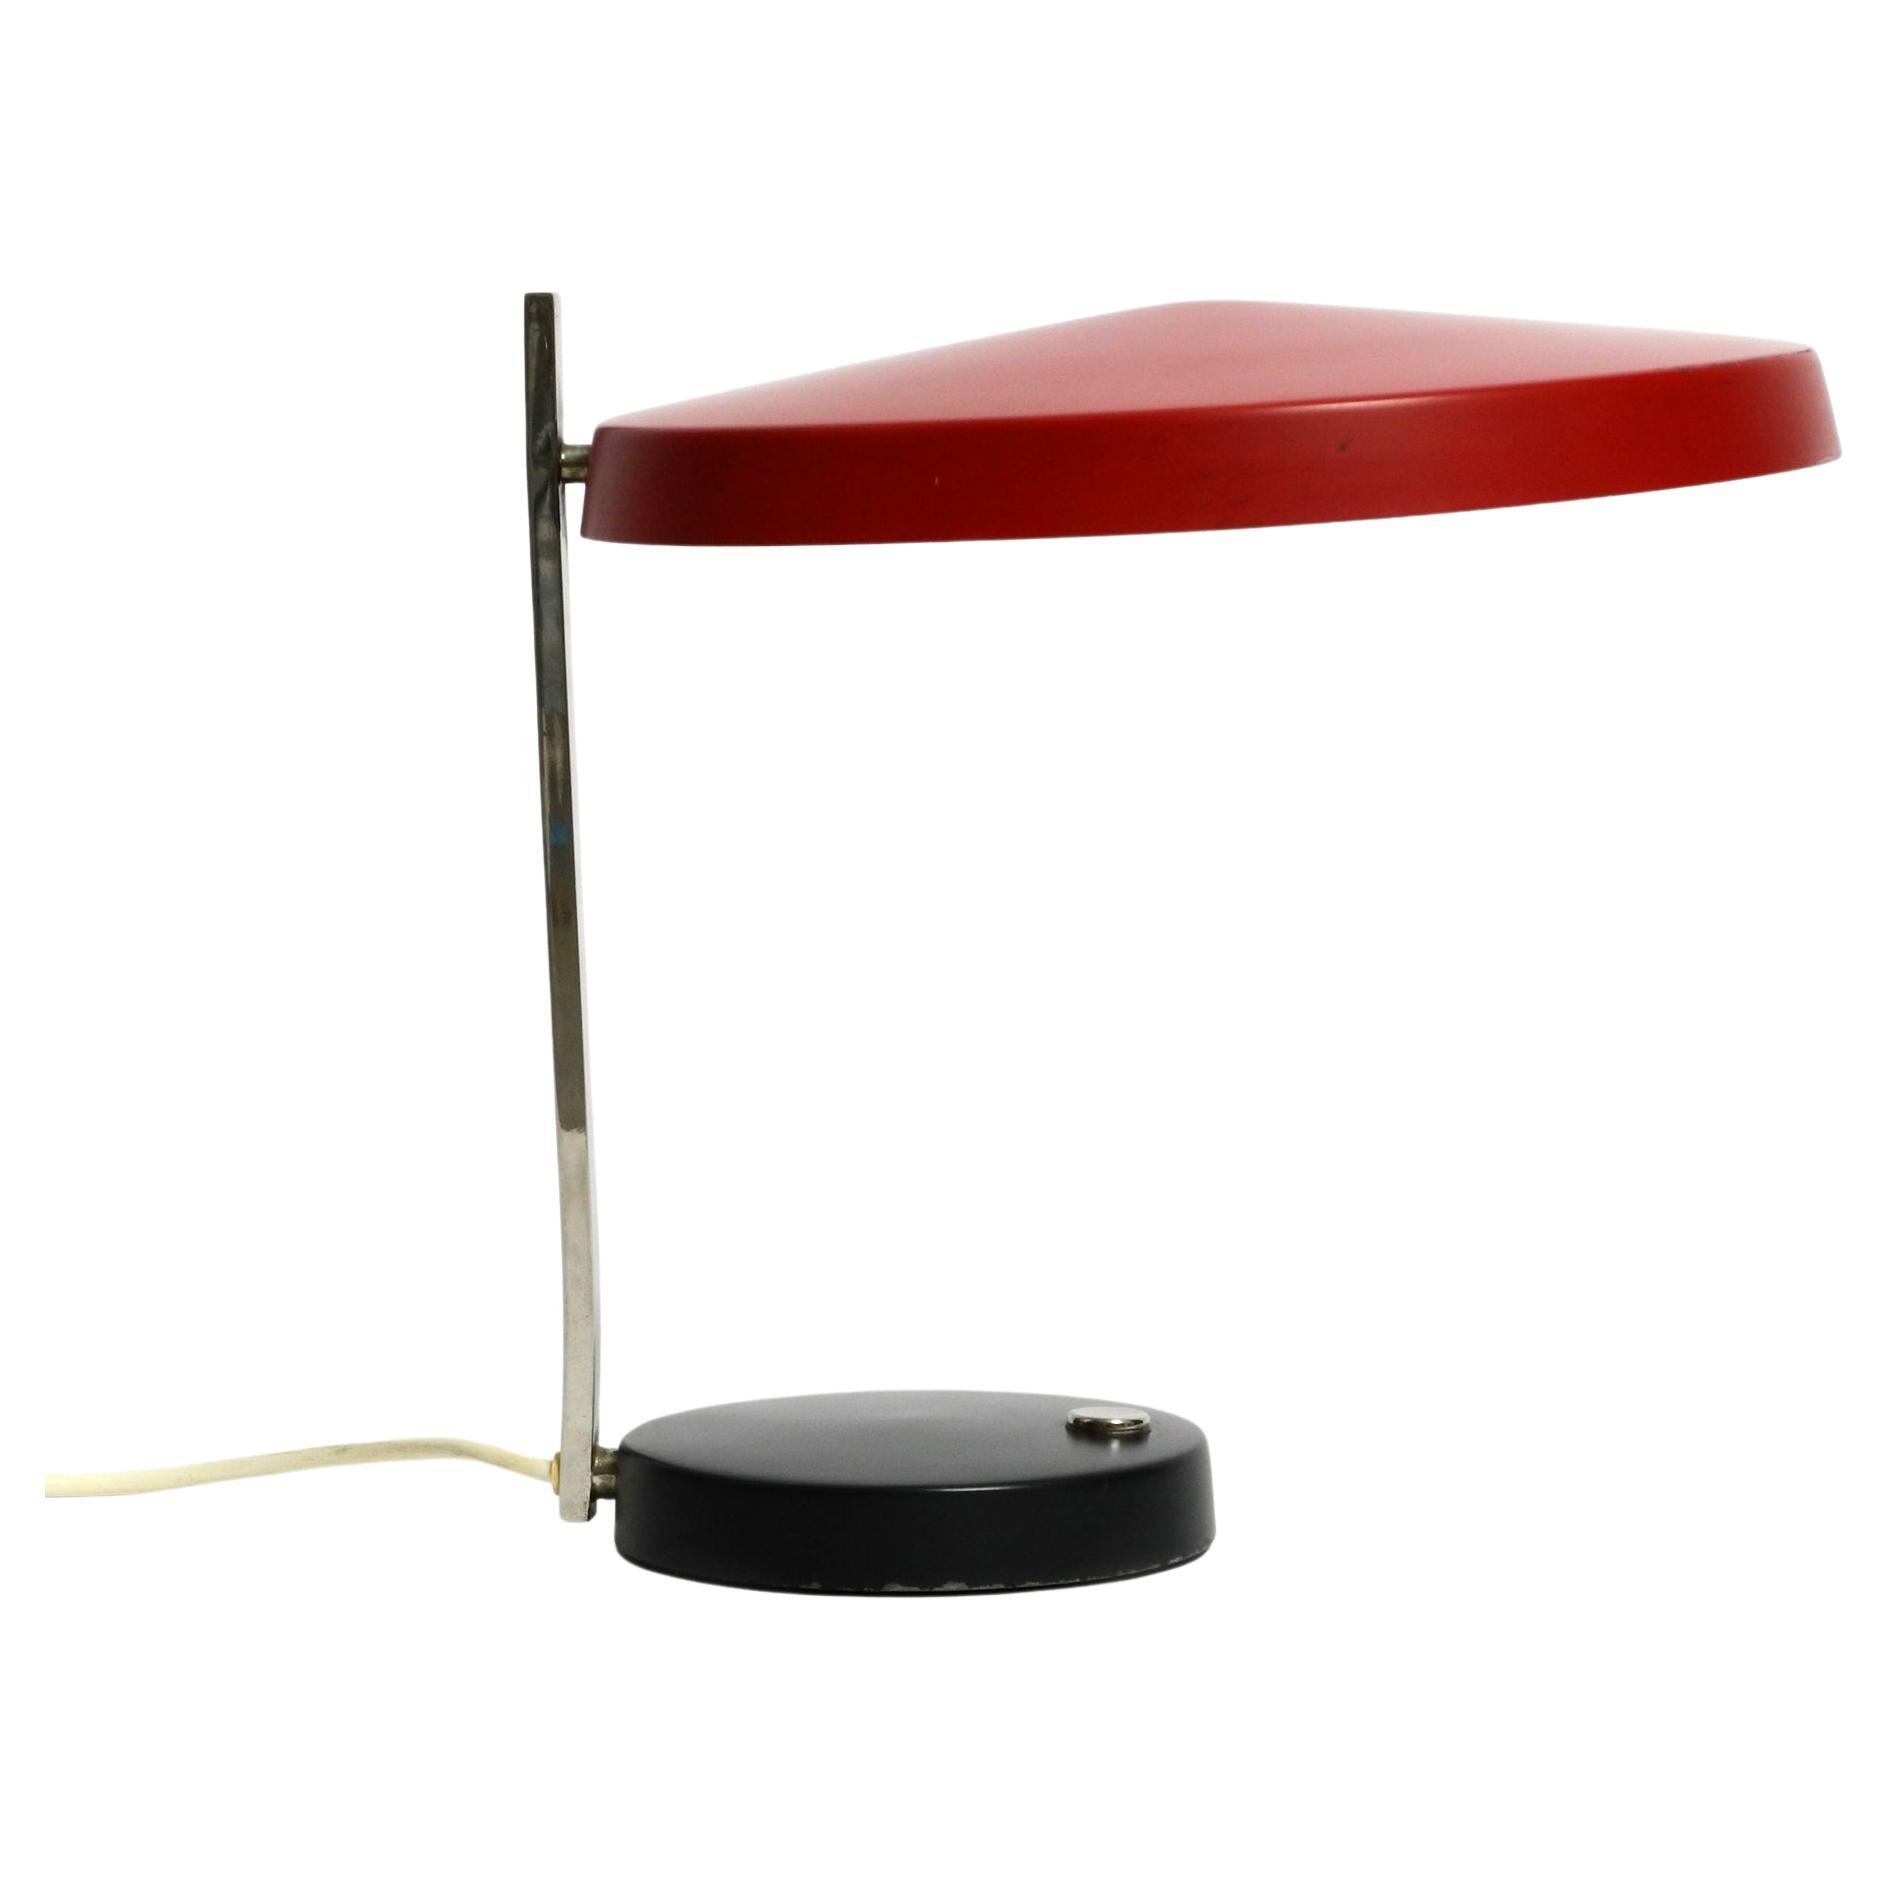 Rare Original Hillebrand Table Lamp Model Oslo from 1962, Design Heinz Pfaender